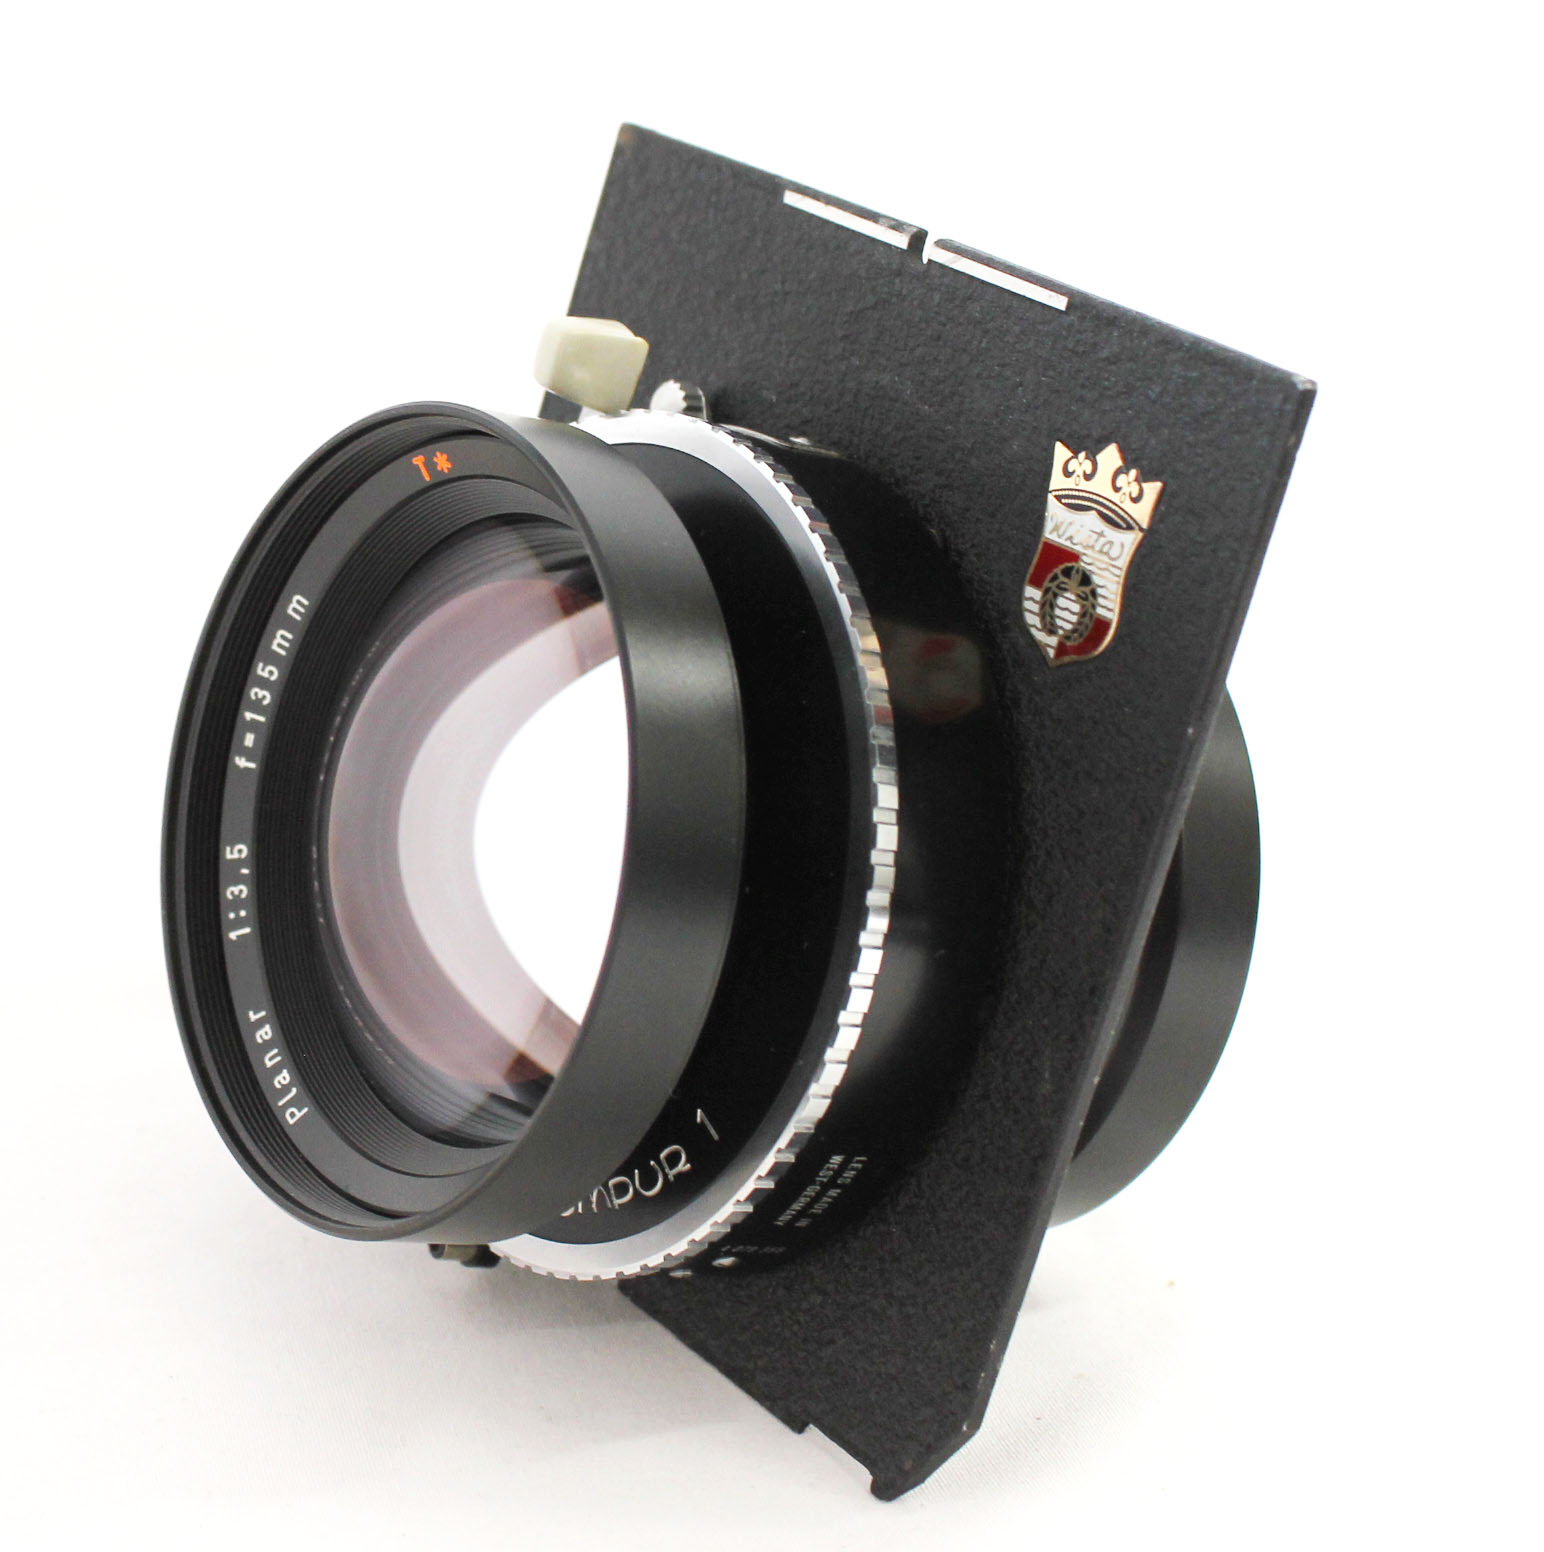 Carl Zeiss Planar 135mm F/3.5 T* 4x5 Lens Compur 1 Shutter w/ Wista Linhof Board from Japan Photo 1